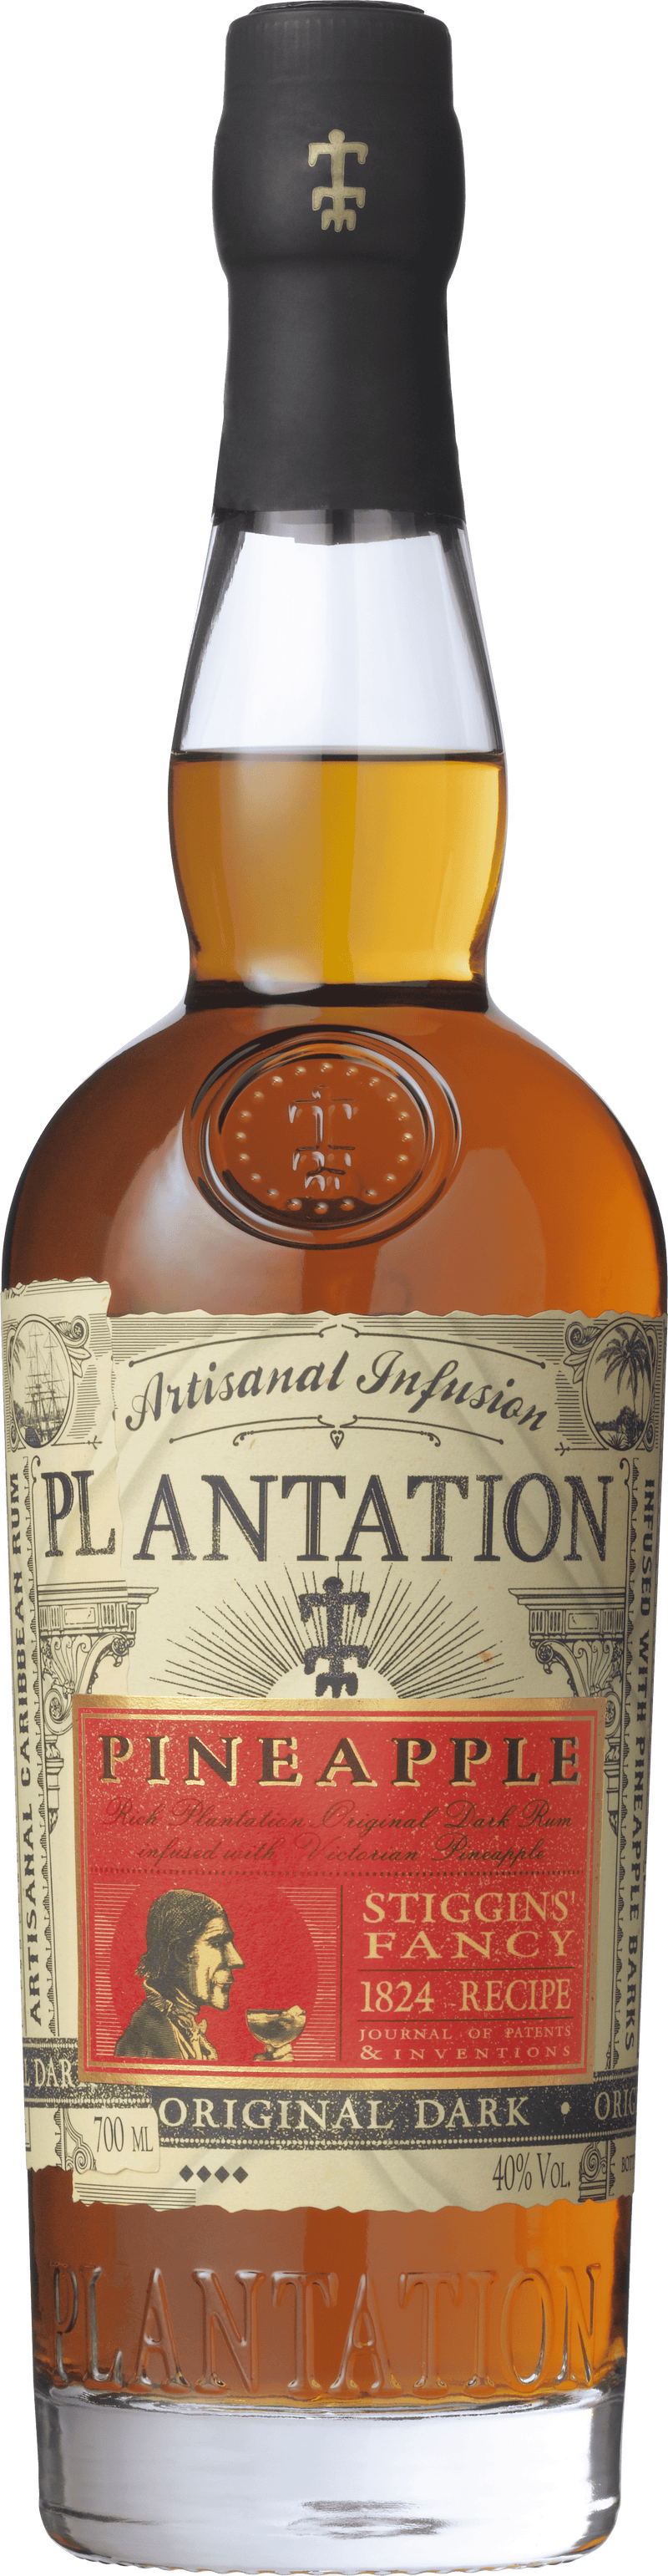 Plantation Stiggins&